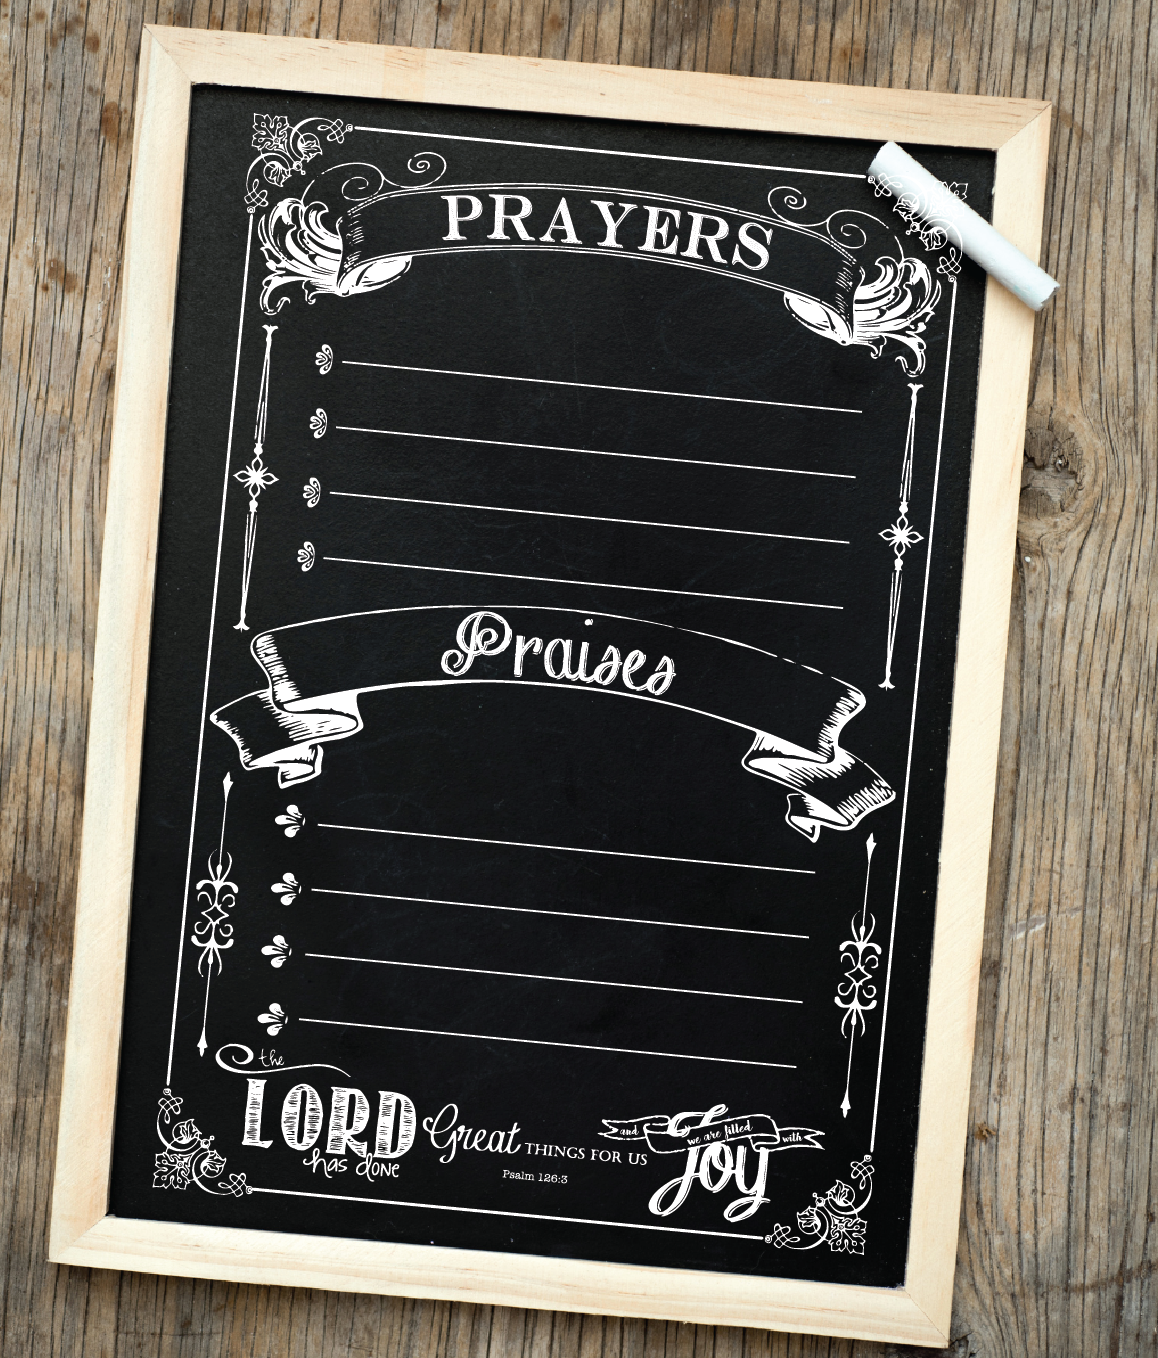 Prayer Board - Mesh Stencil 12x18